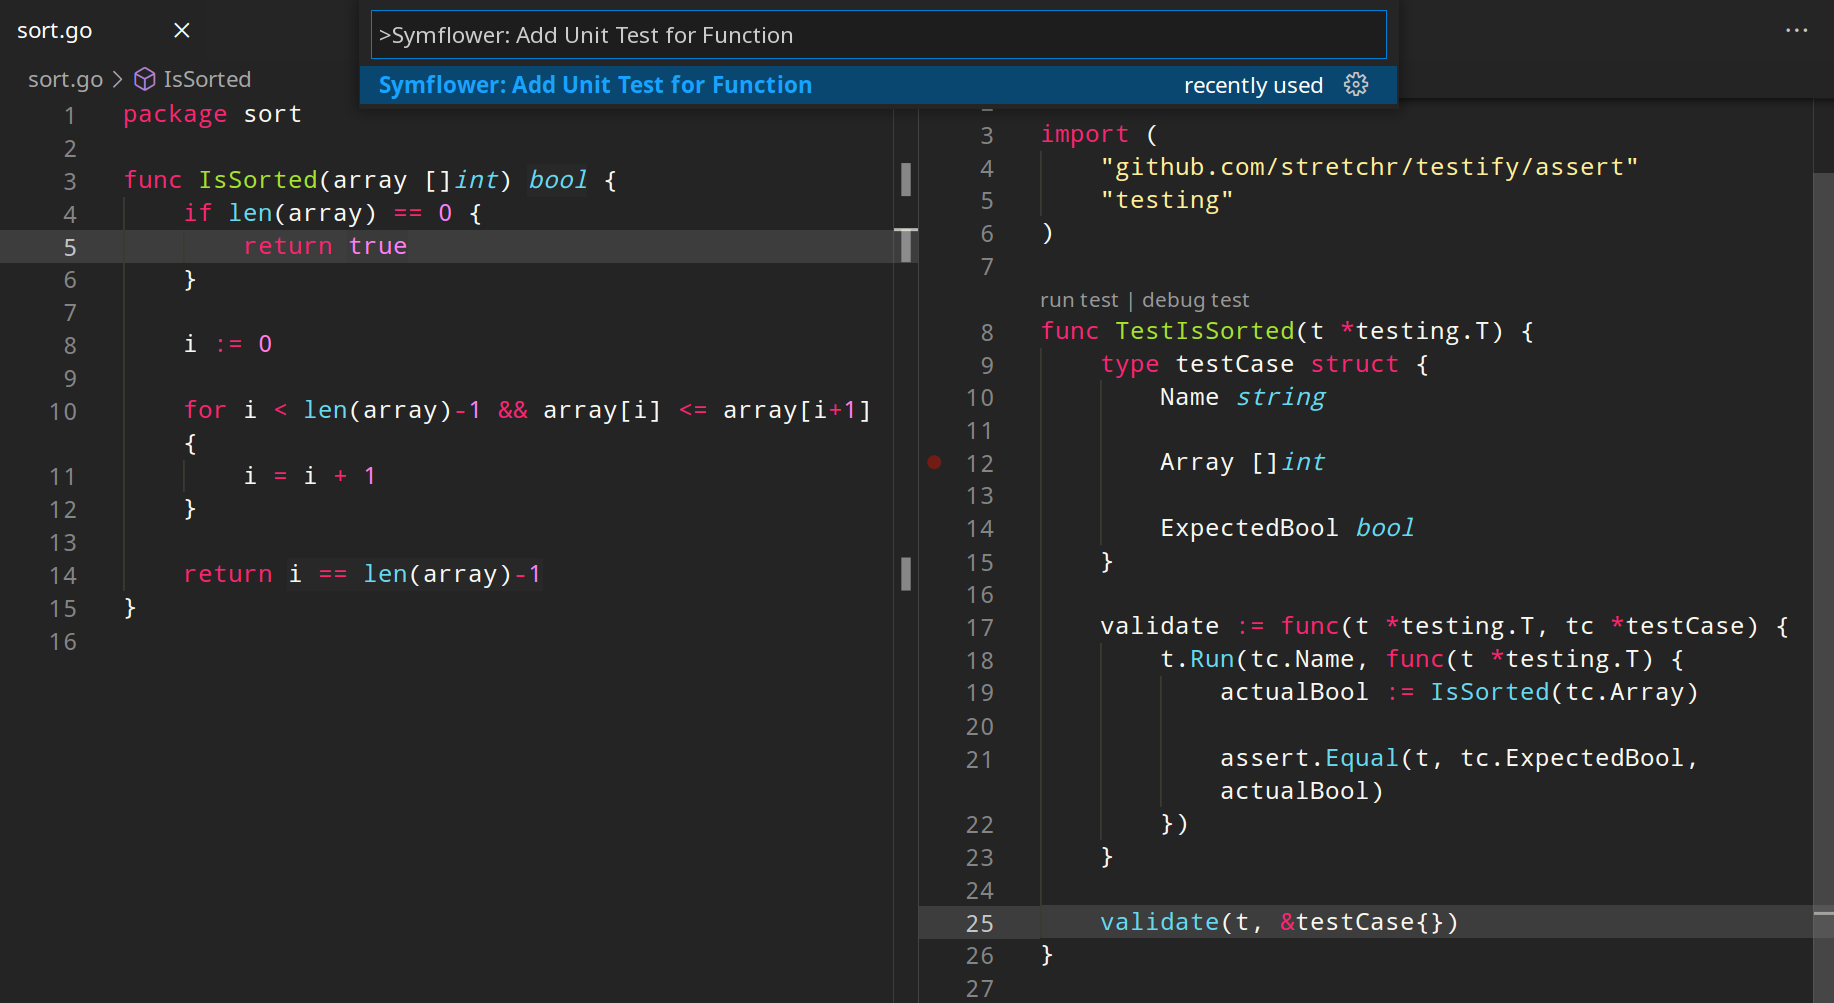 The Symflower Visual Studio Code Extension